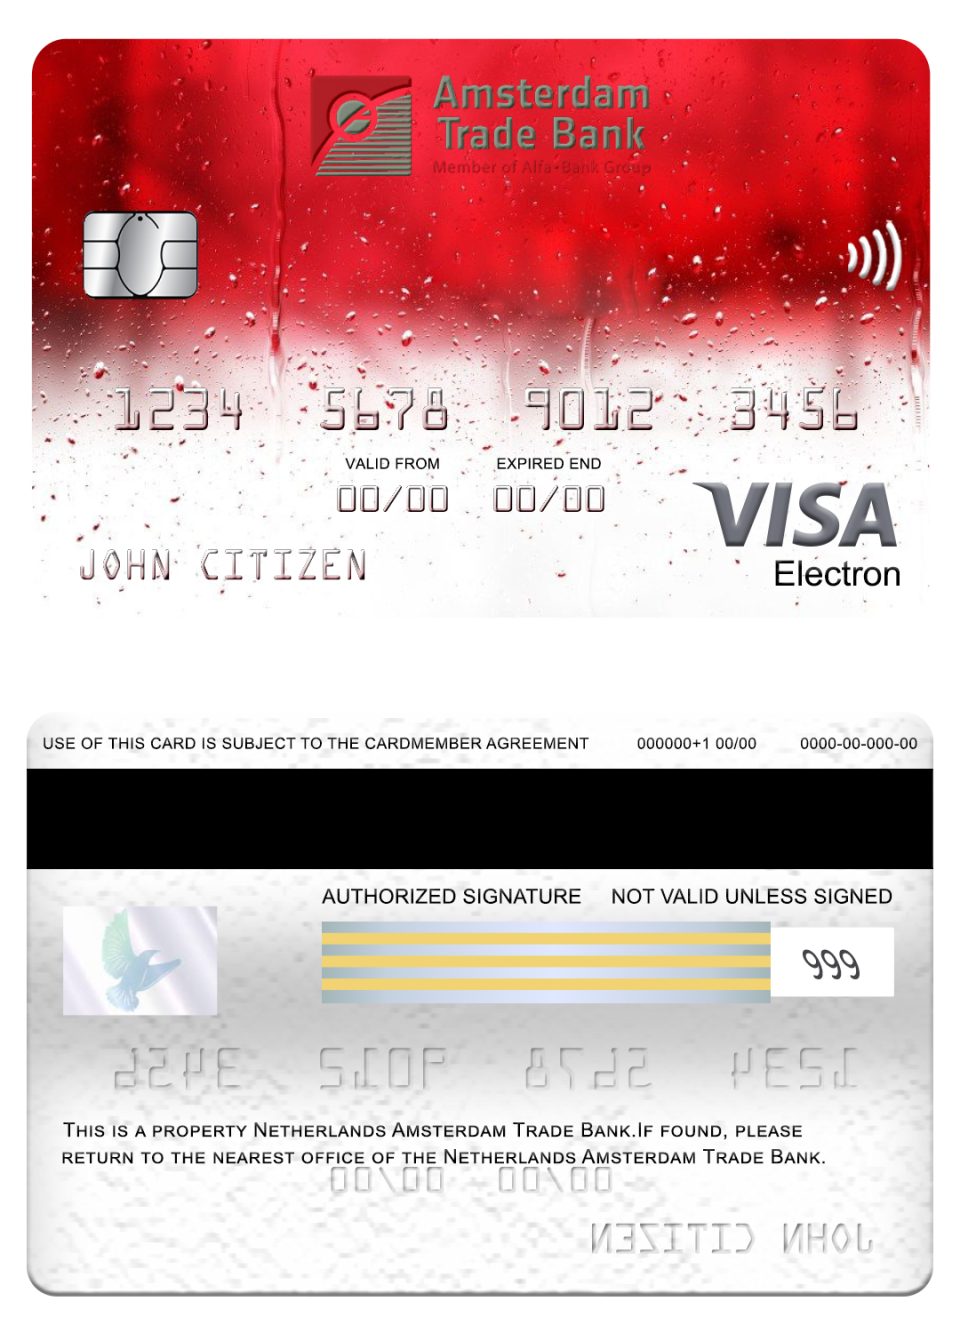 Editable Netherlands Amsterdam Trade bank visa electron card Templates in PSD Format